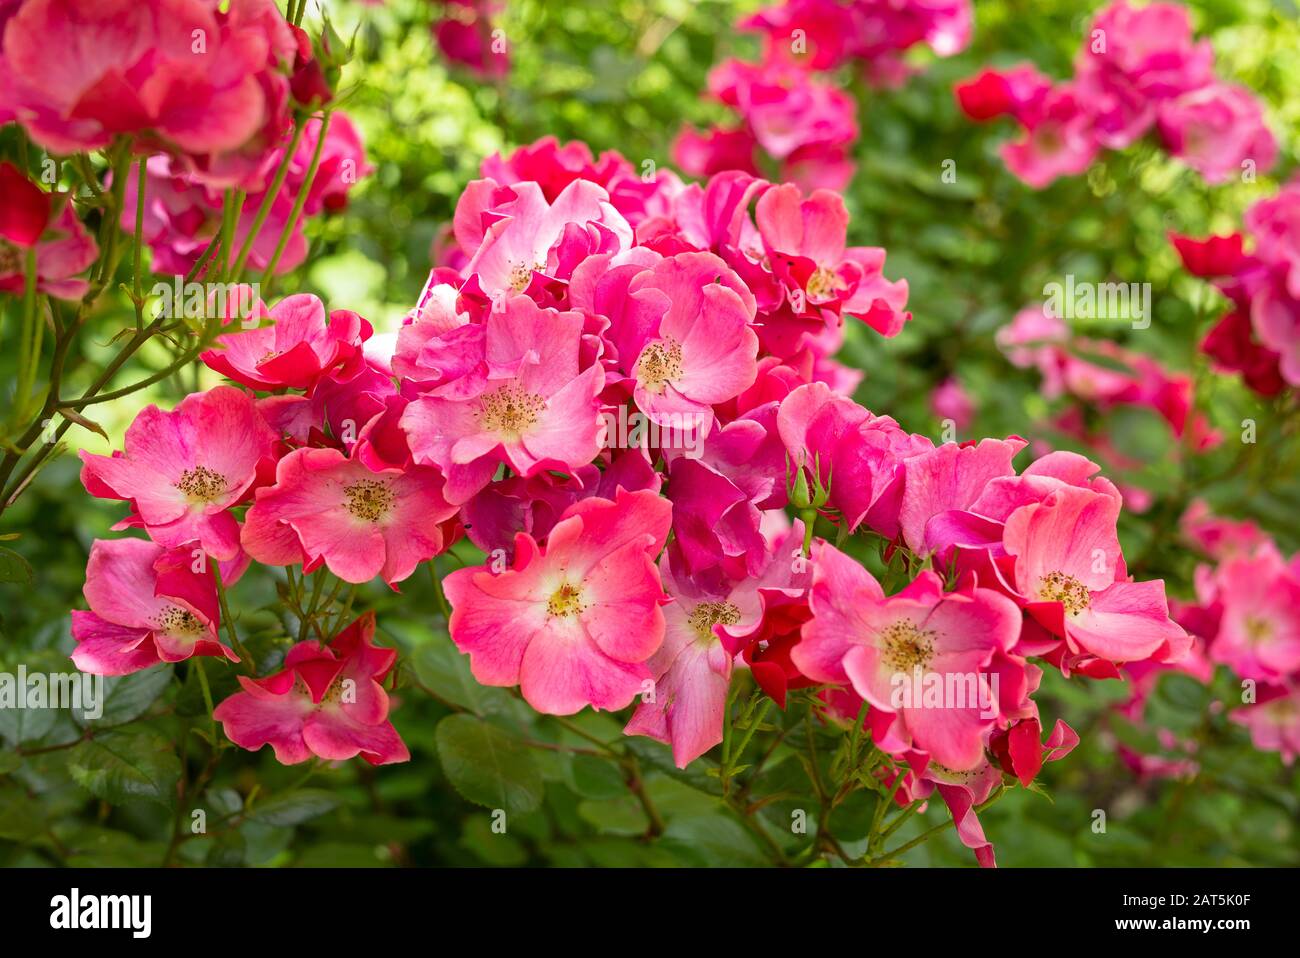 Floribunda rose betty prior hi-res stock photography and images - Alamy